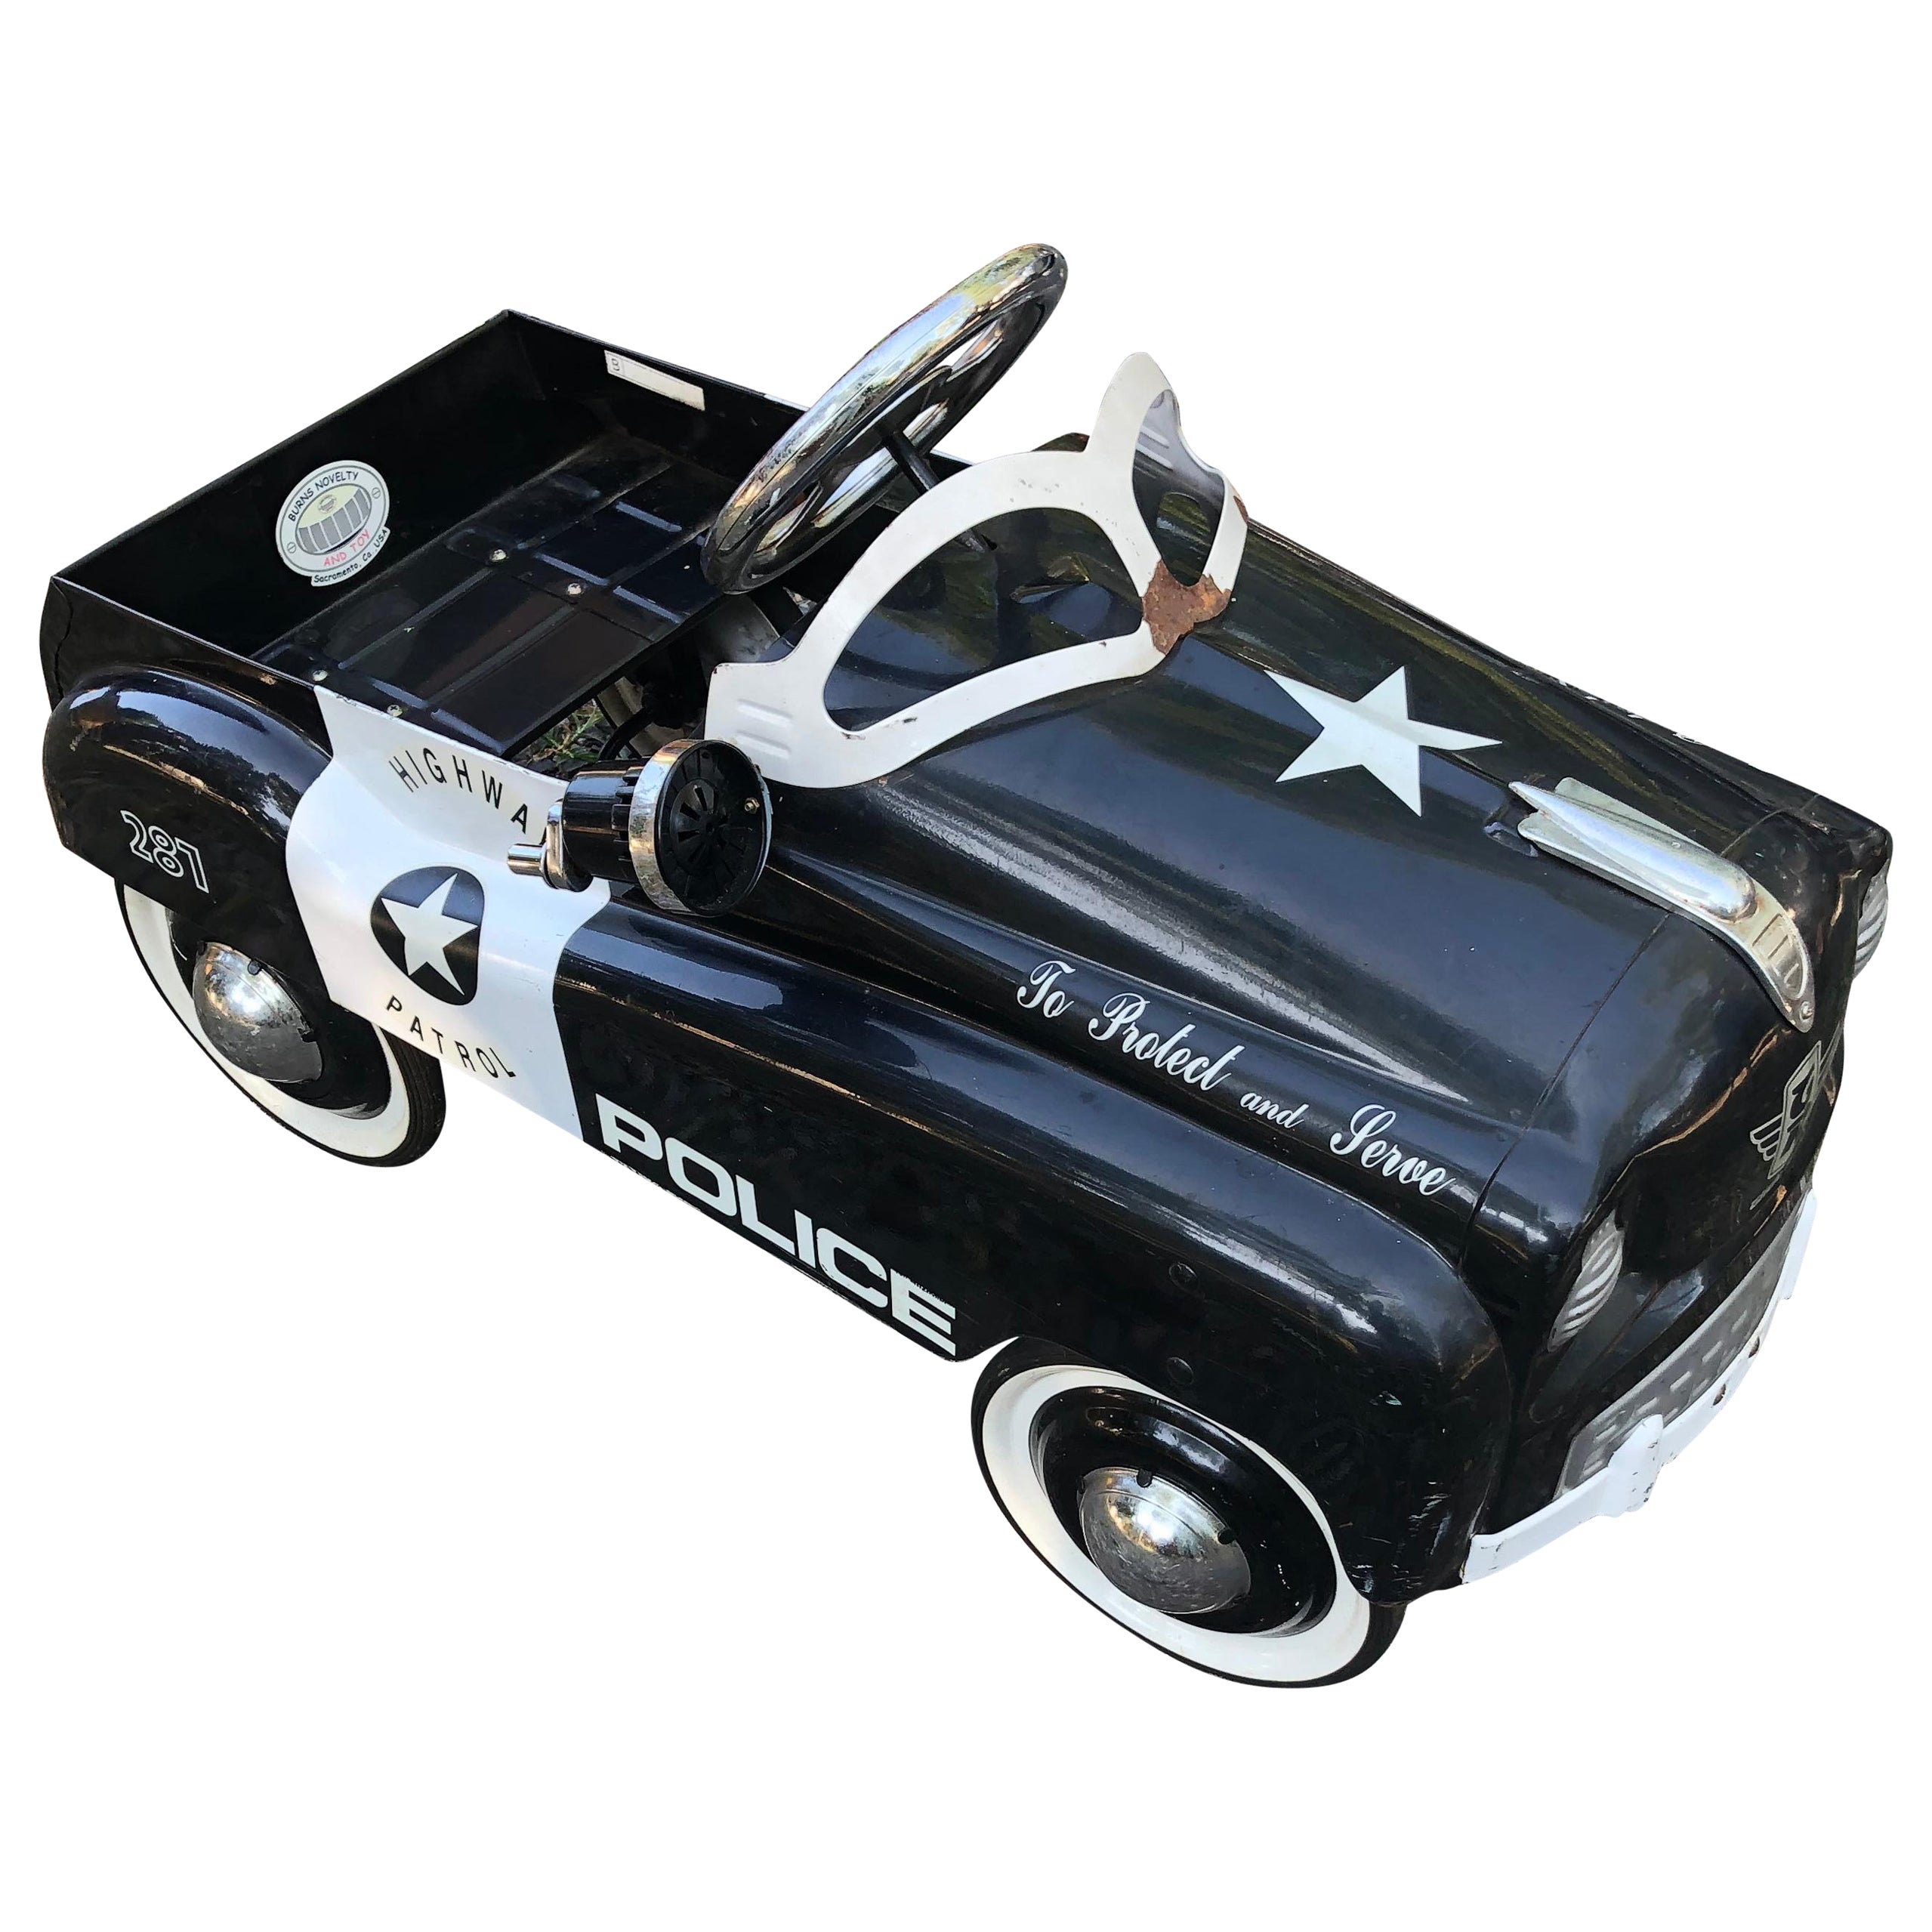 Black & White Vintage Toy Police Pedal Car For Sale